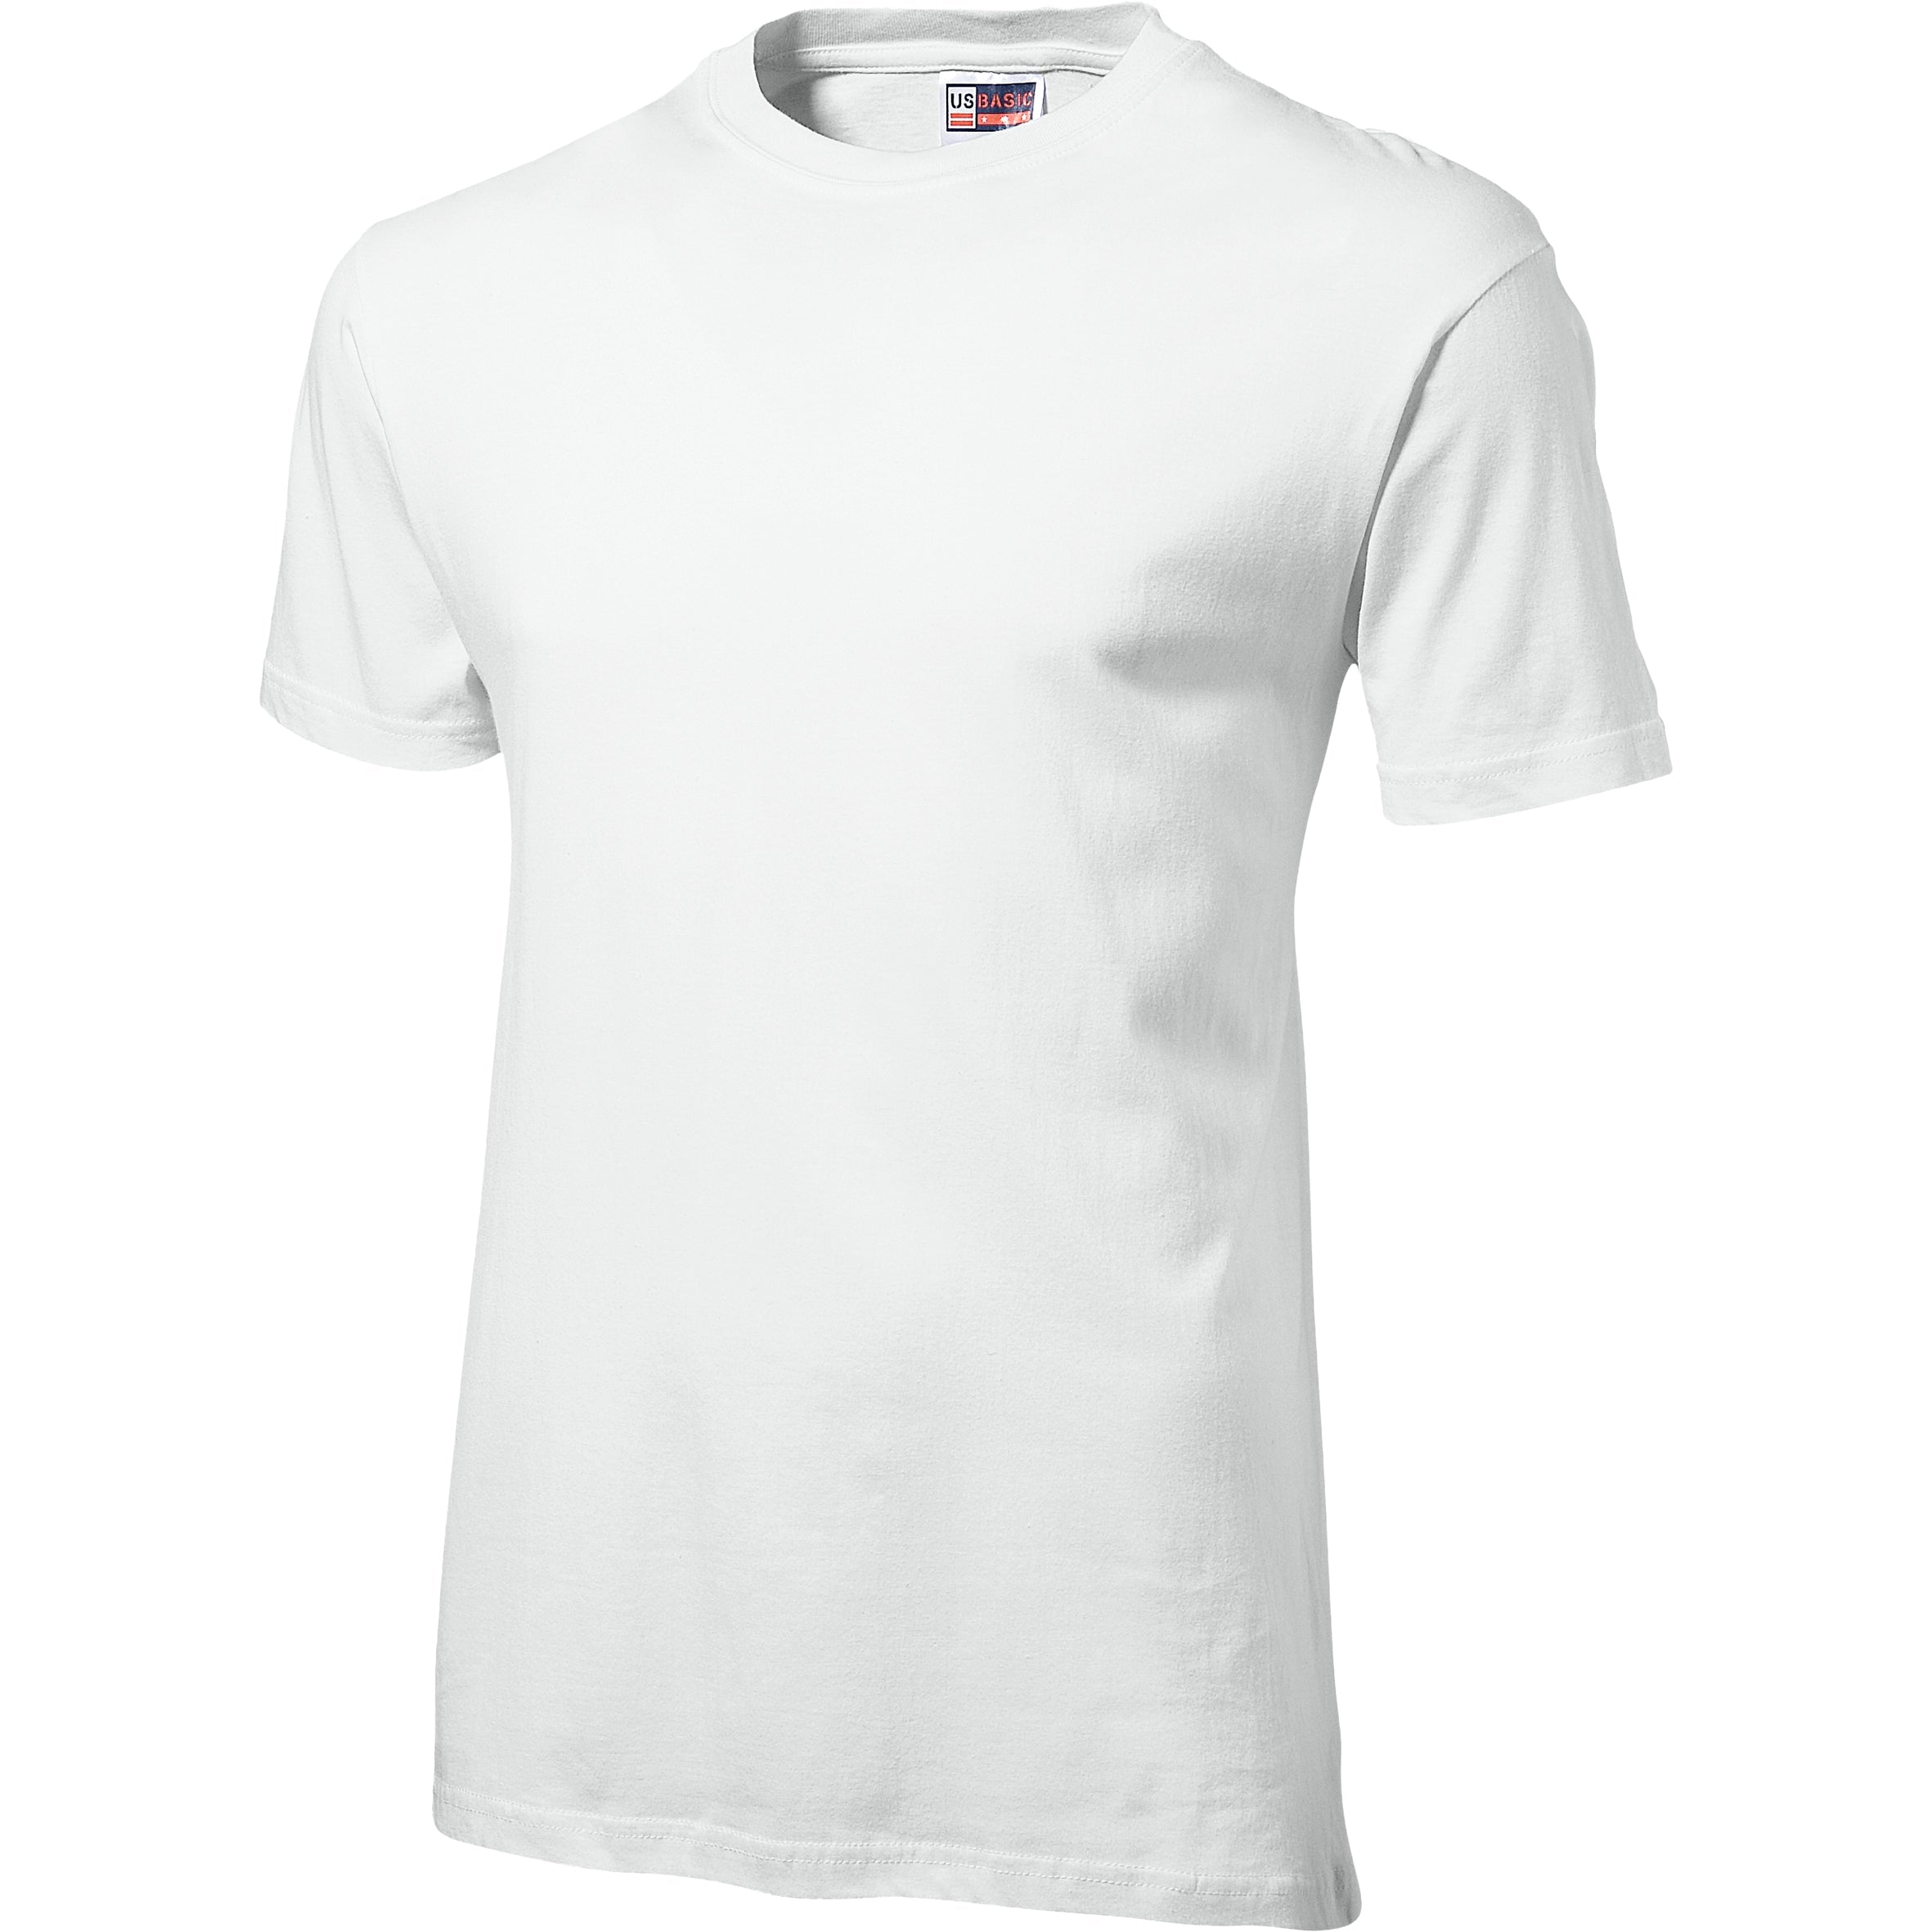 Unisex Super Club 135 T-Shirt L / White / W